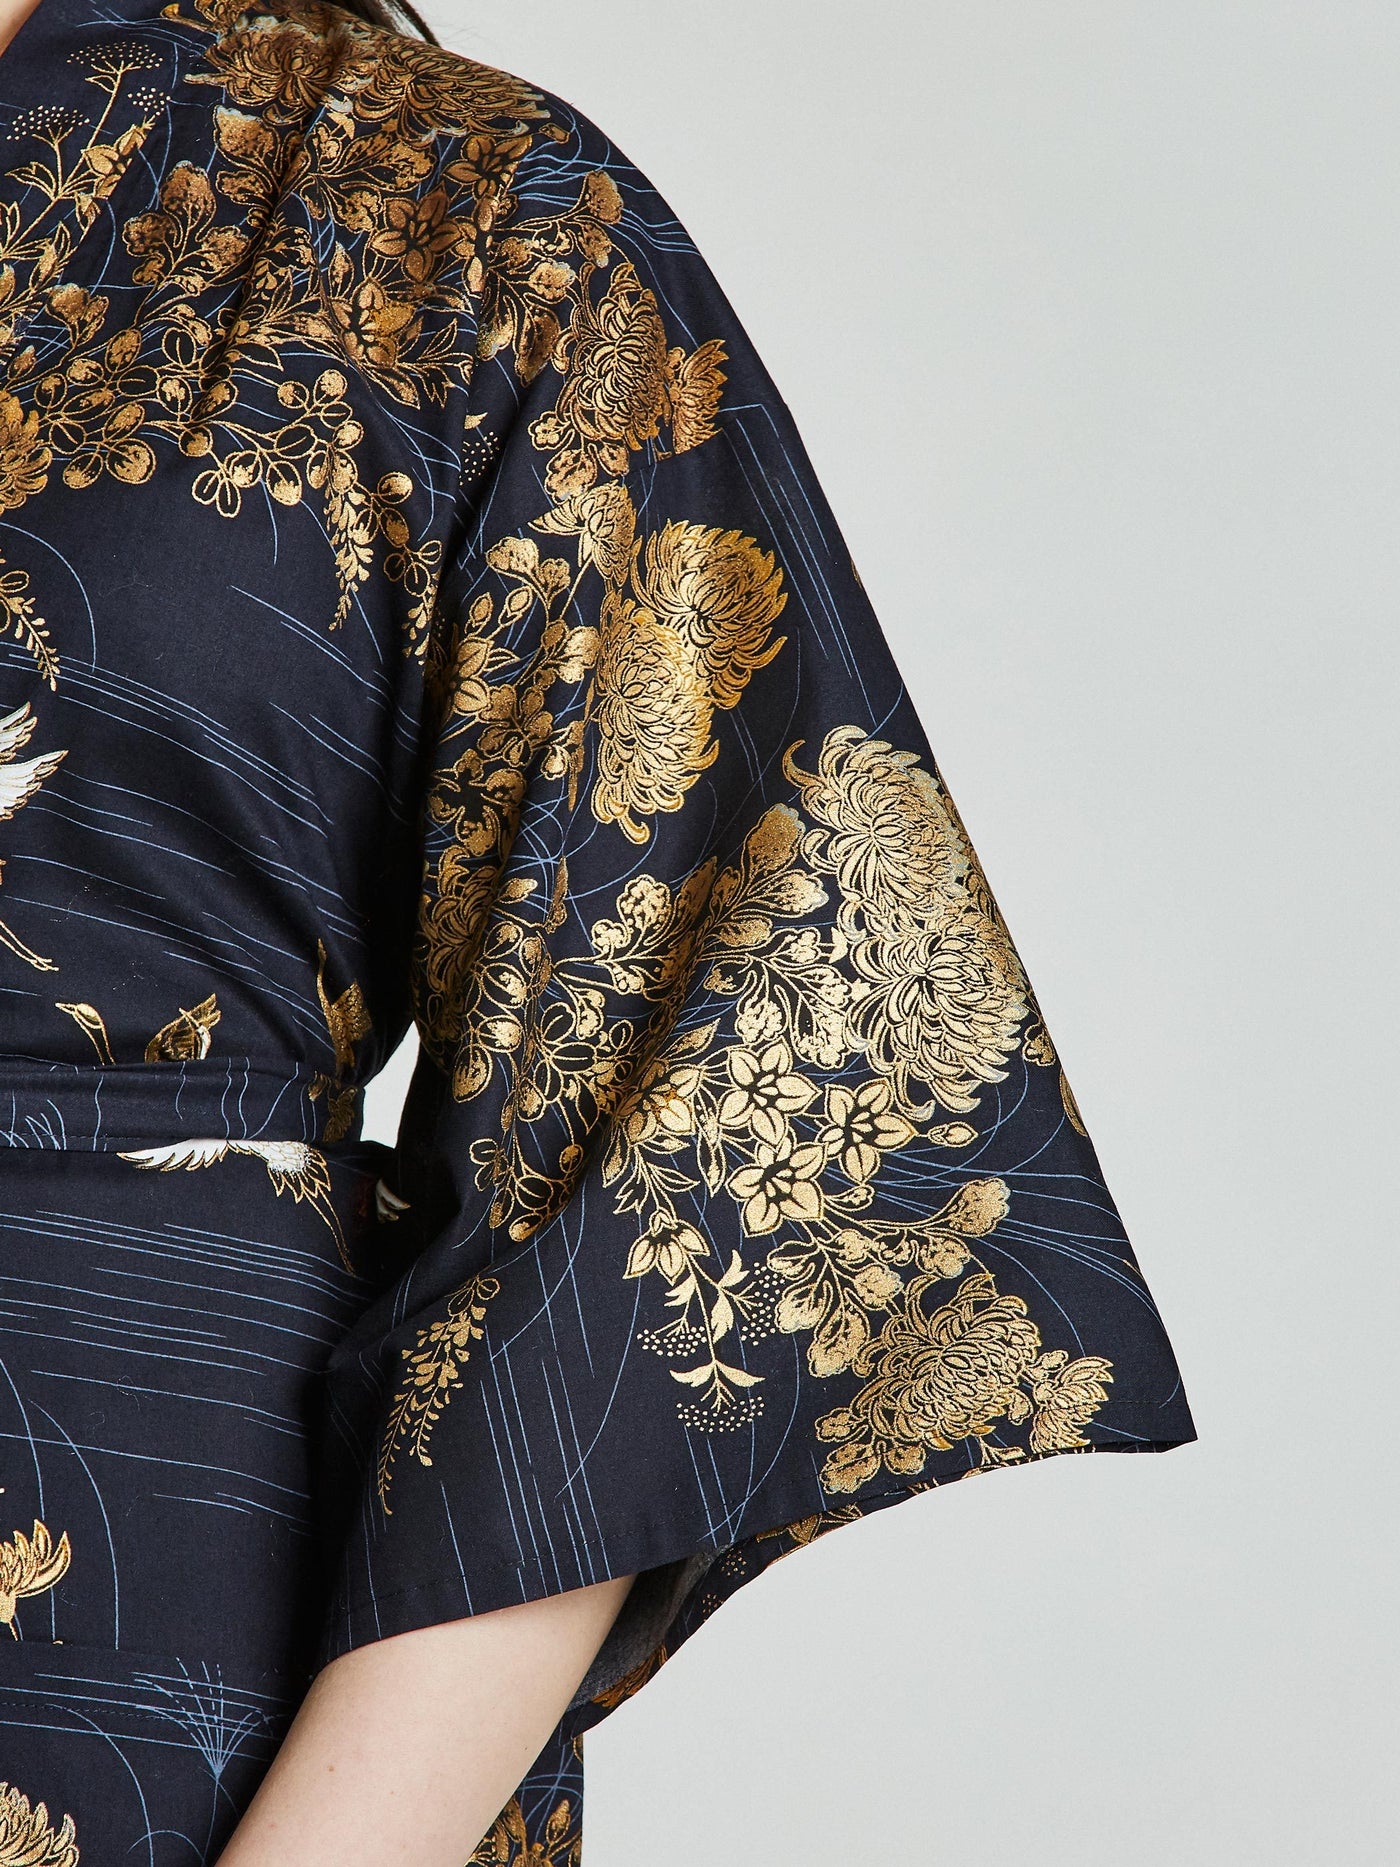 Japanese Crane Navy Blue Kimono Robe sleeve close-up